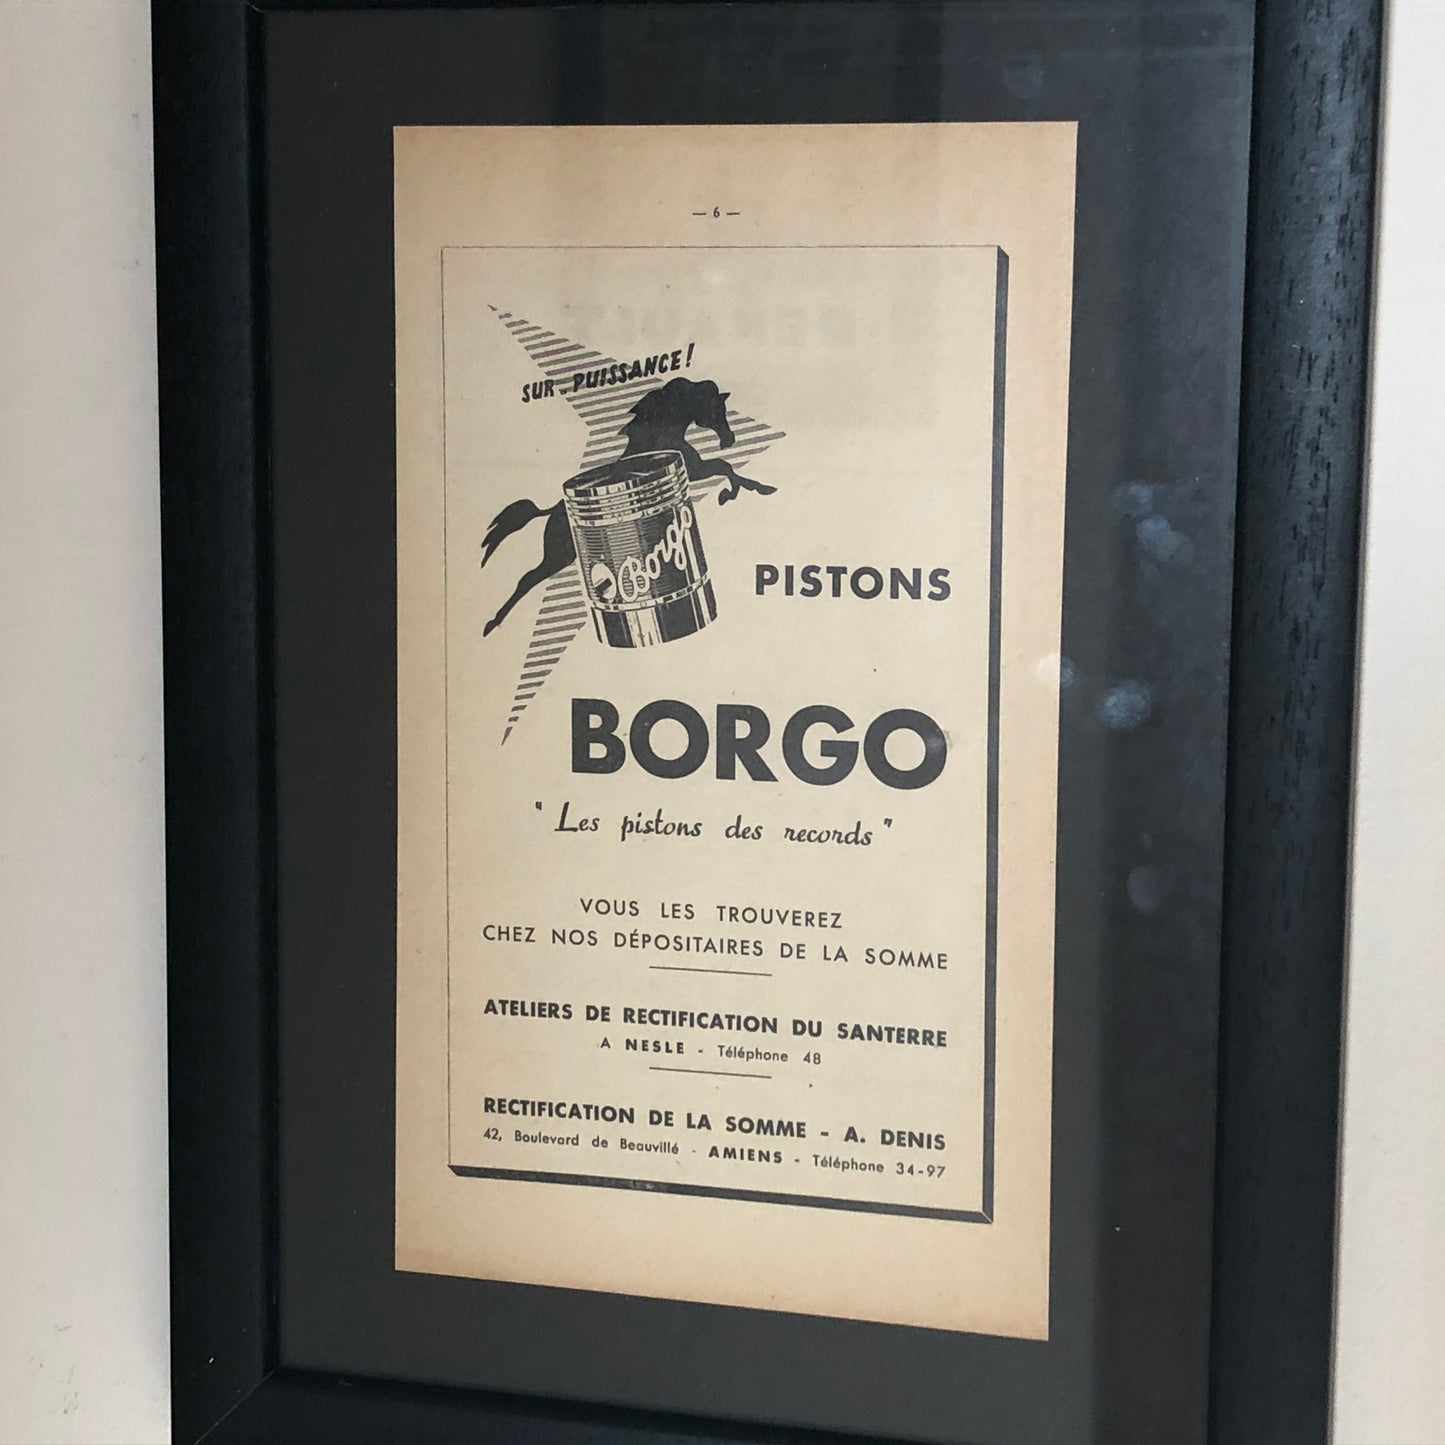 Pistoni Borgo, Advertising Year 1954 The Pistoni of Records